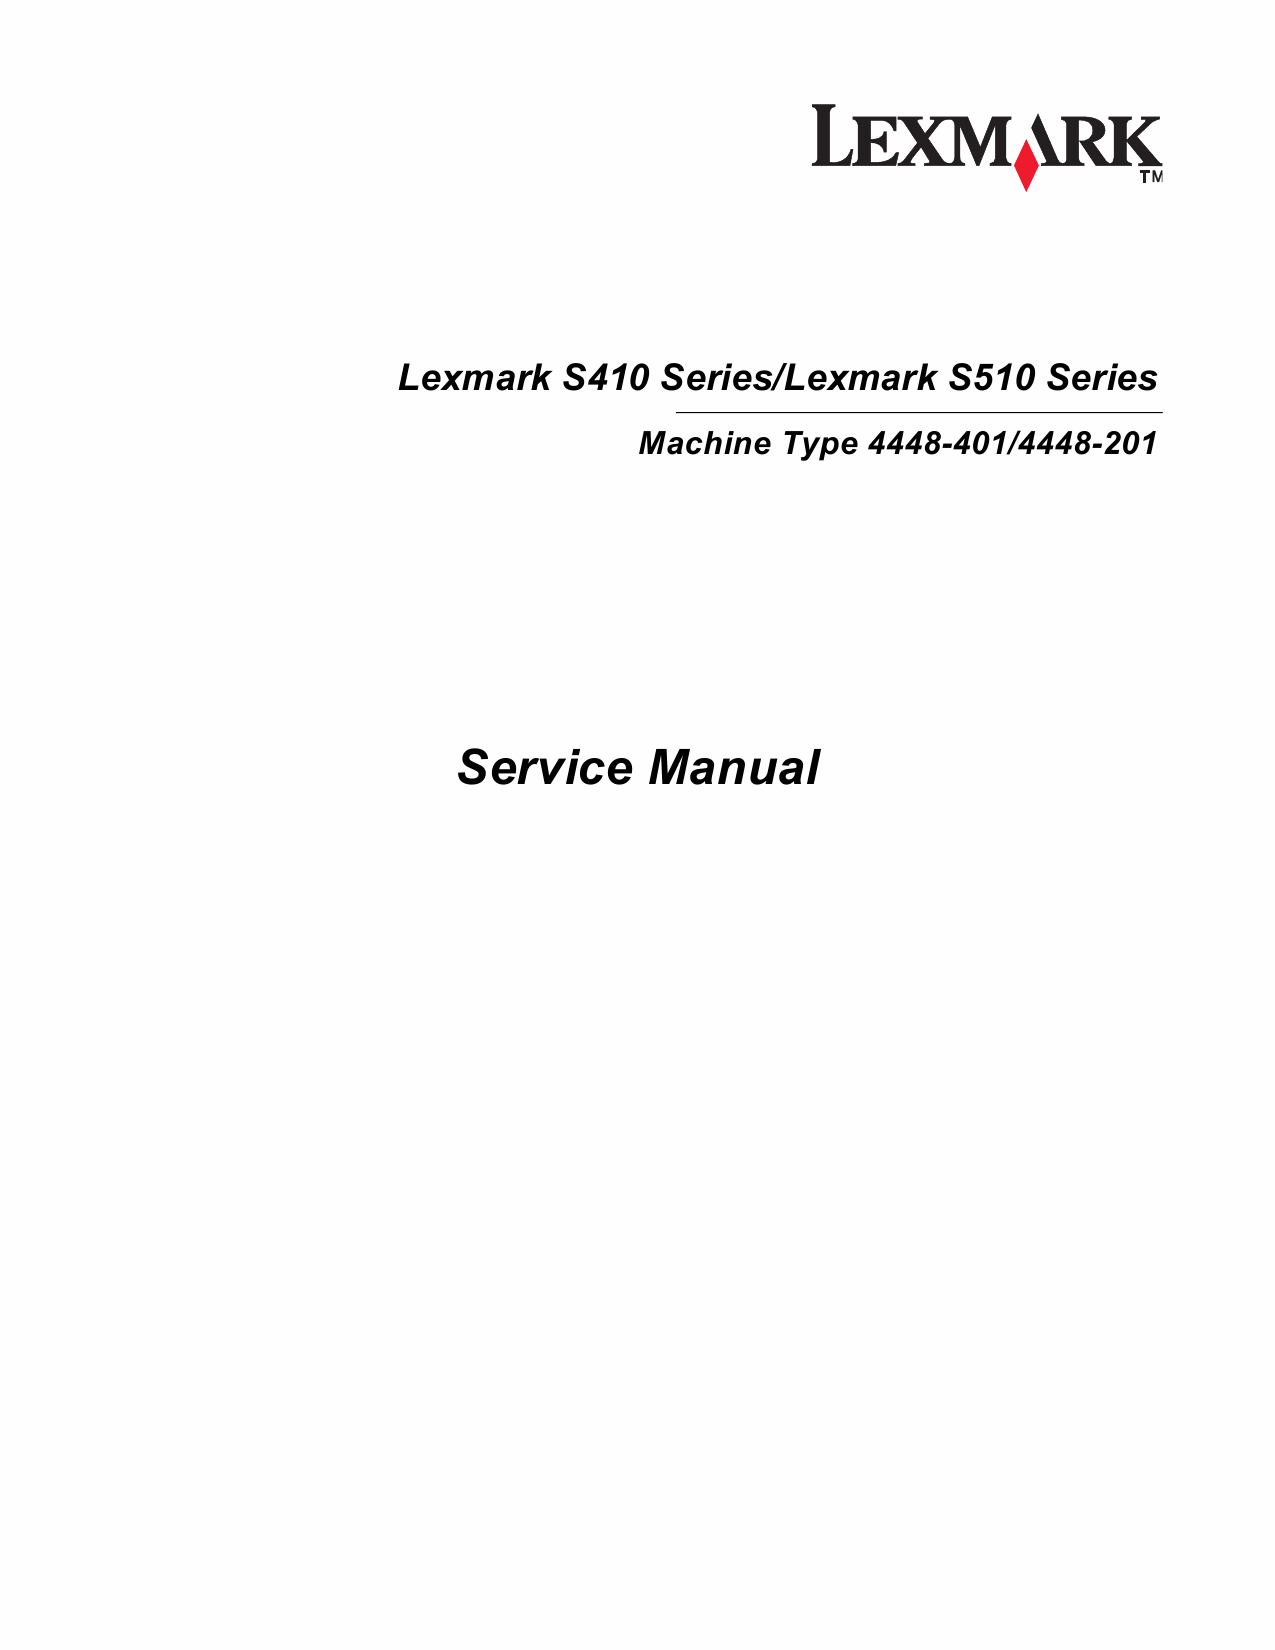 Lexmark S S410 S510 4448 Service Manual-1